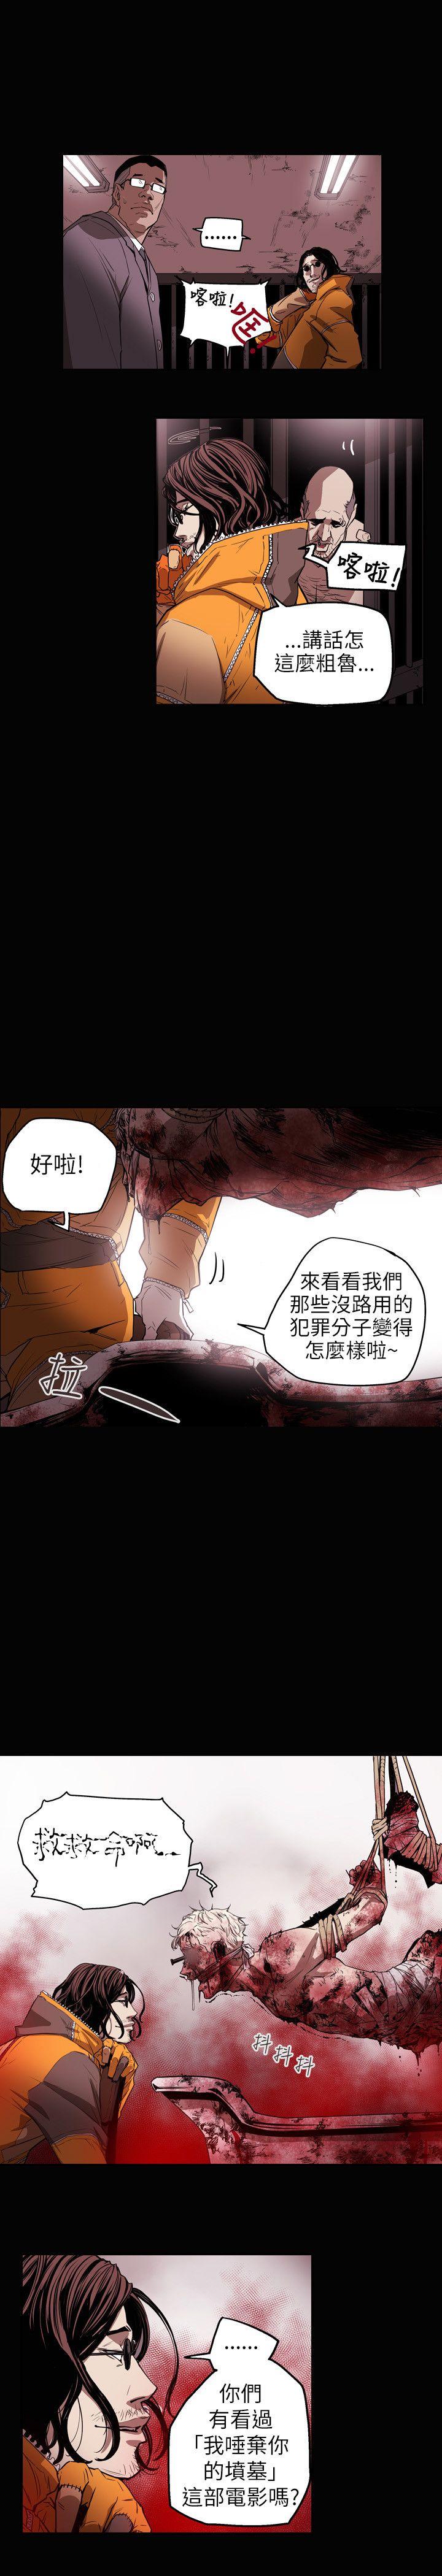 Honey trap 甜蜜陷阱  第31话 漫画图片19.jpg